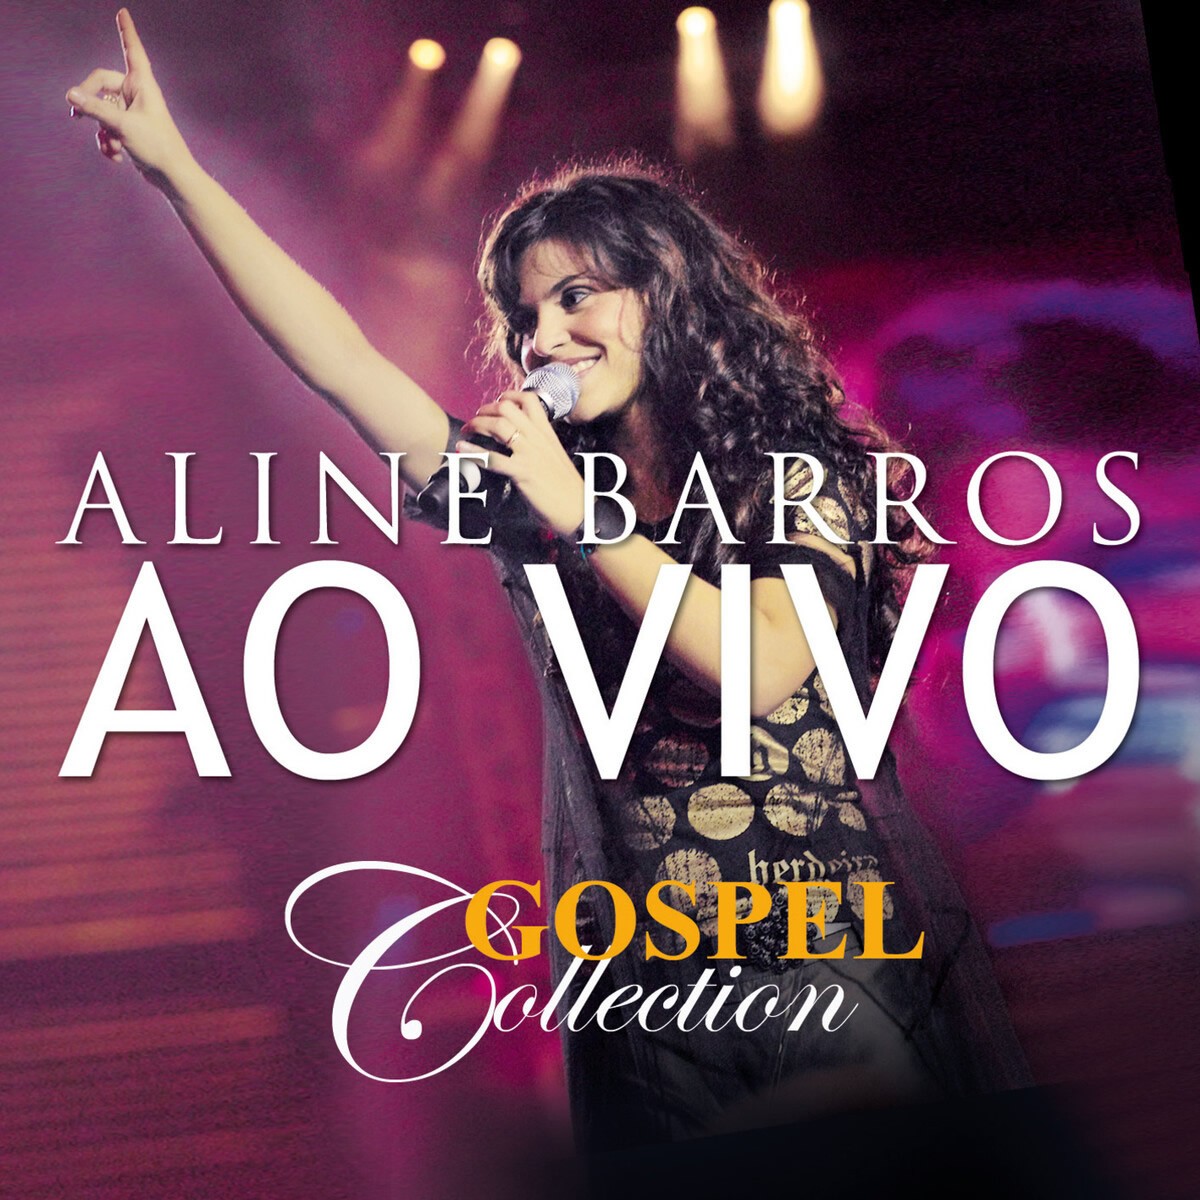 Download Aline Barros - Gospel Collection Ao Vivo [Mp3] via Torrent